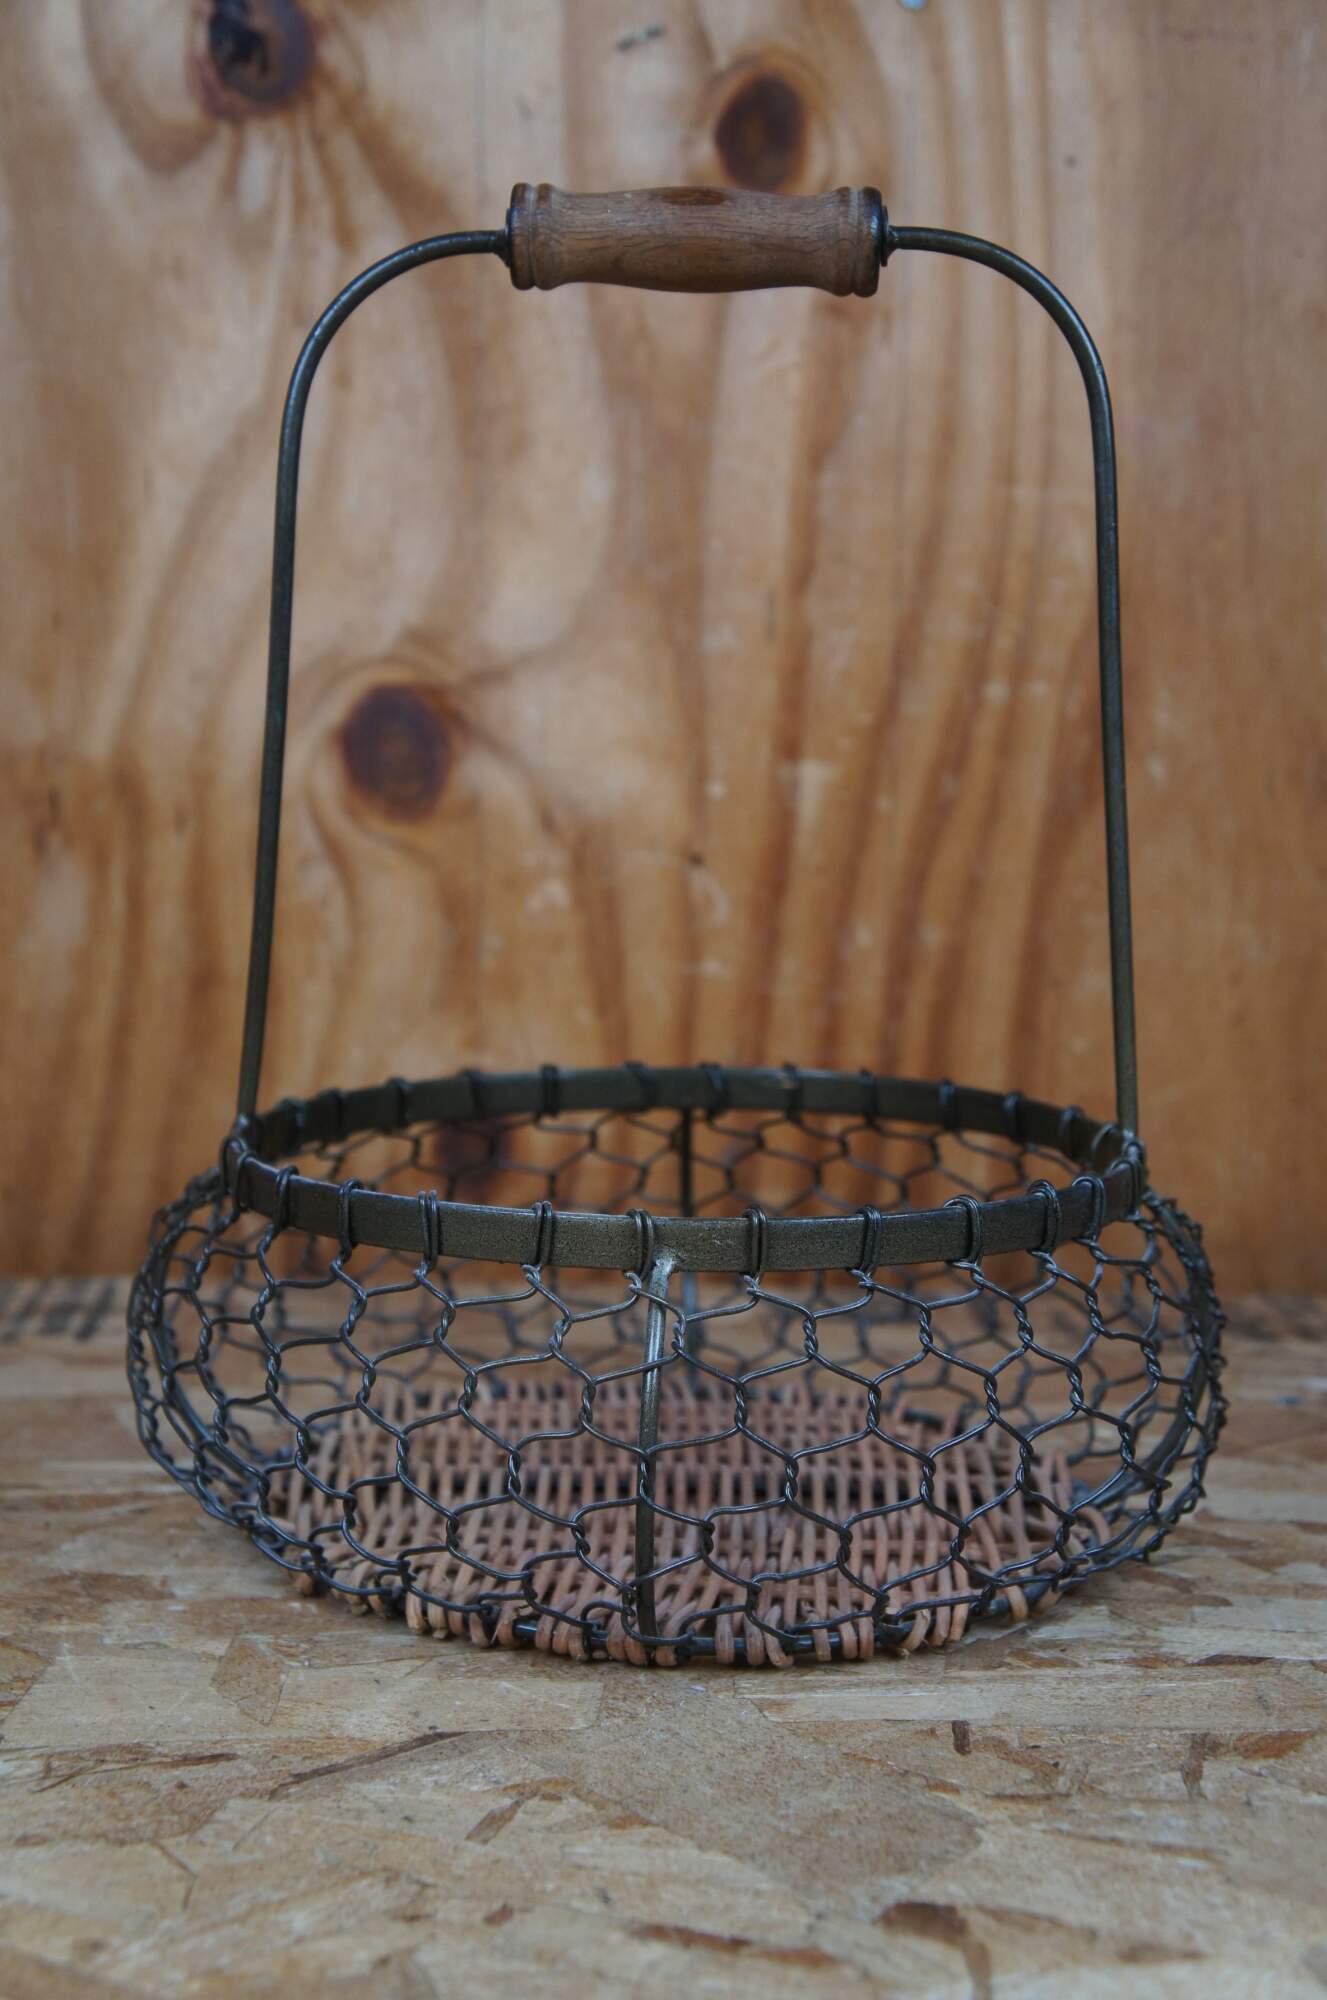 Kitchen  Vintage Wire Chicken Egg Basket Egg Gathering Basket